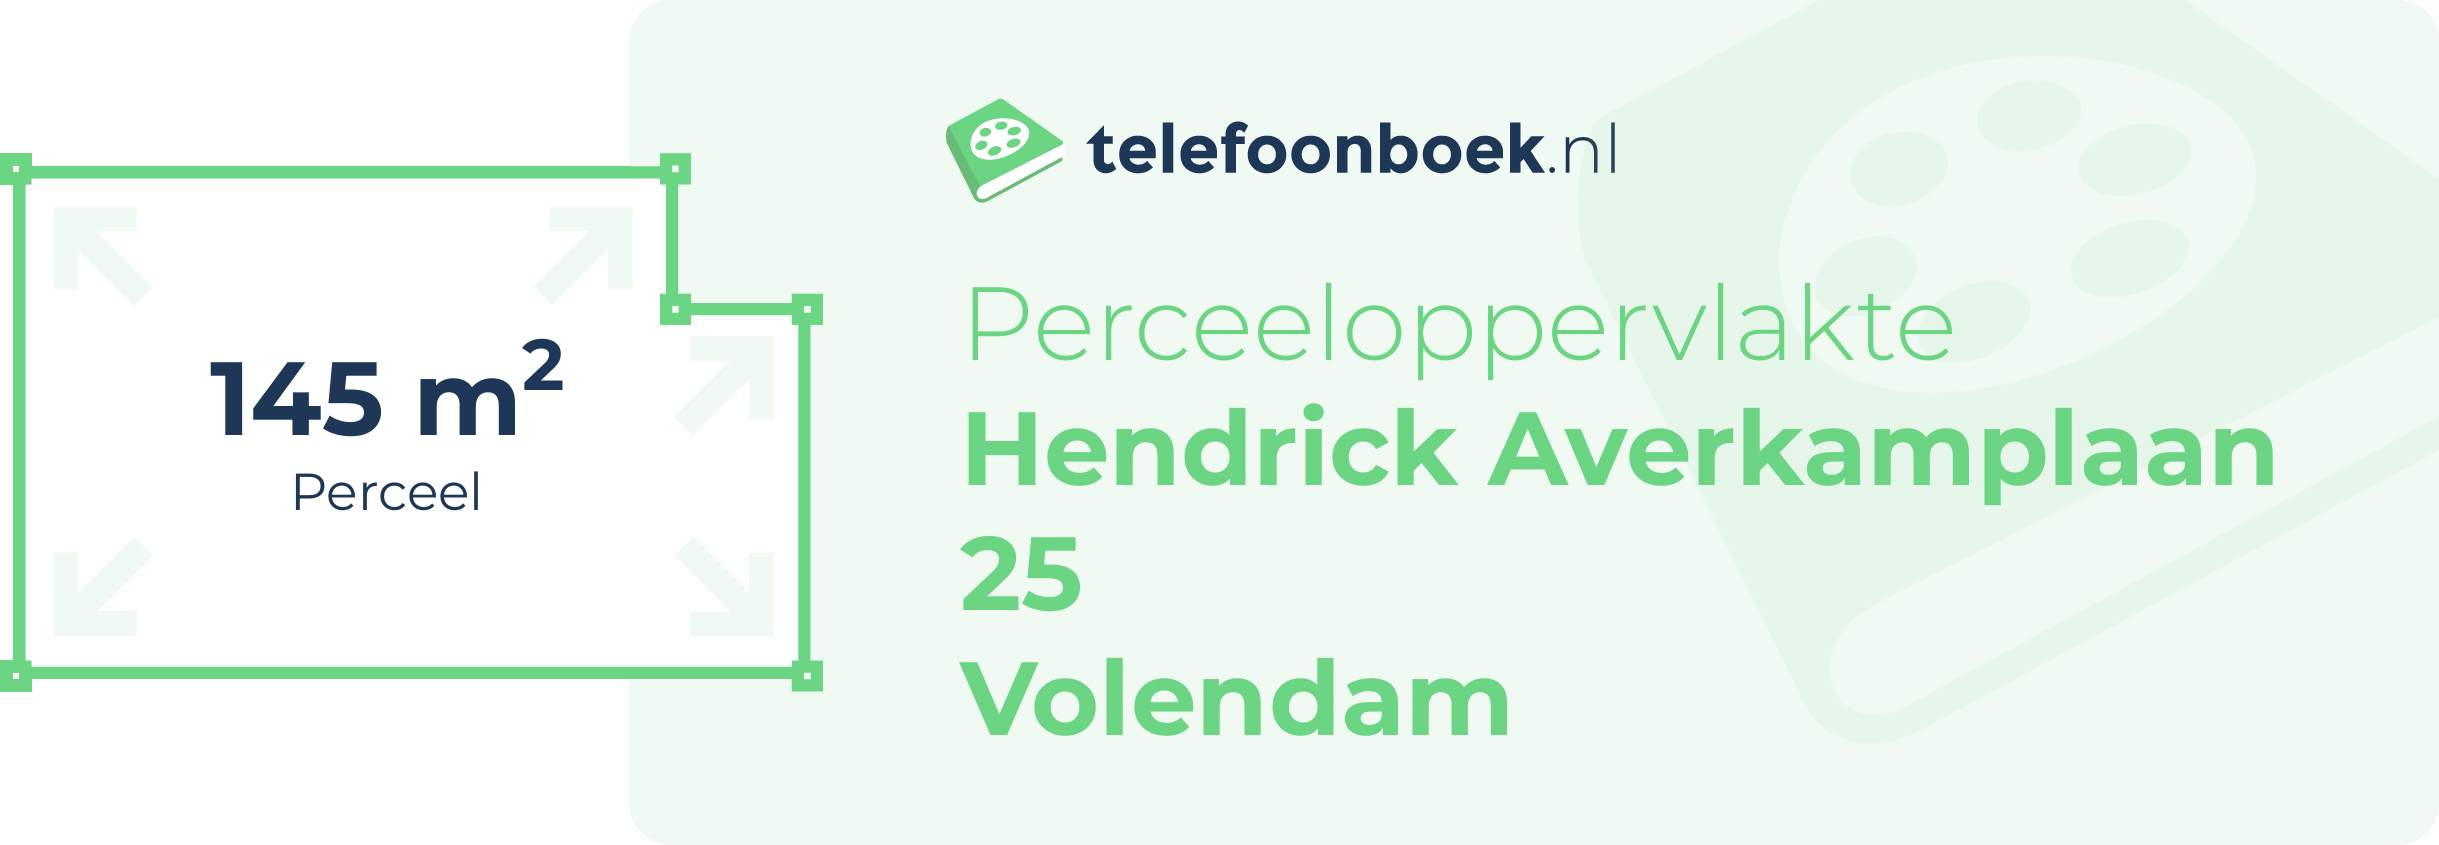 Perceeloppervlakte Hendrick Averkamplaan 25 Volendam